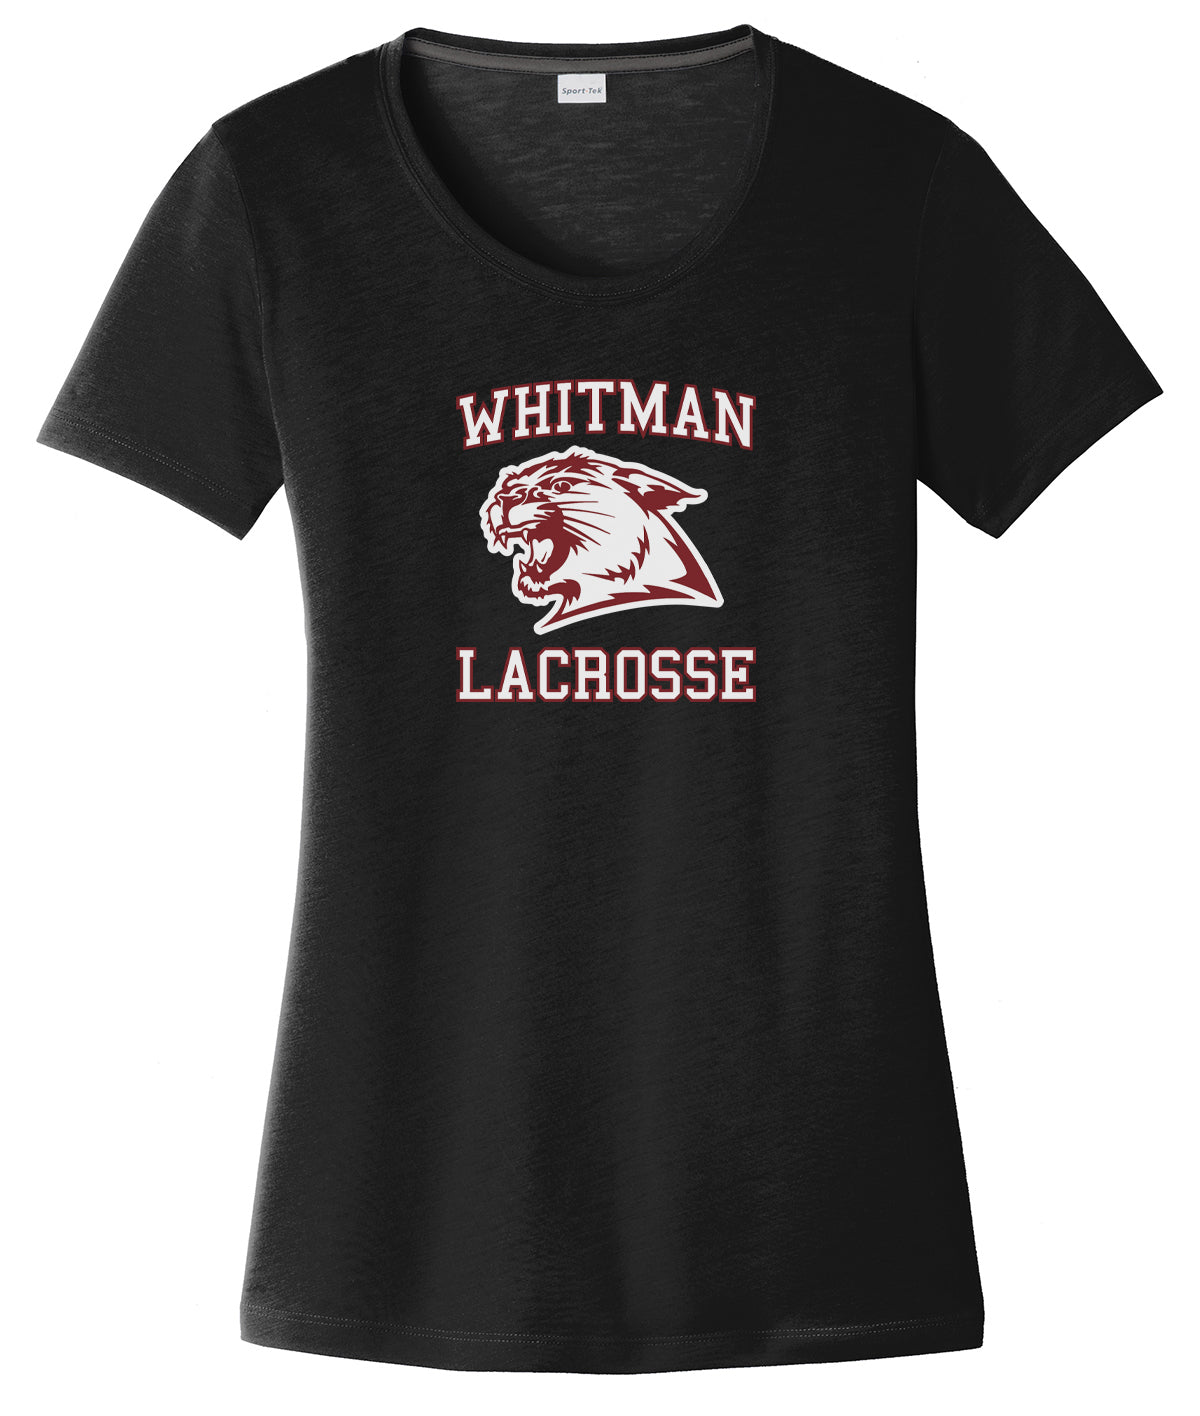 Whitman Lacrosse Women's CottonTouch Performance T-Shirt